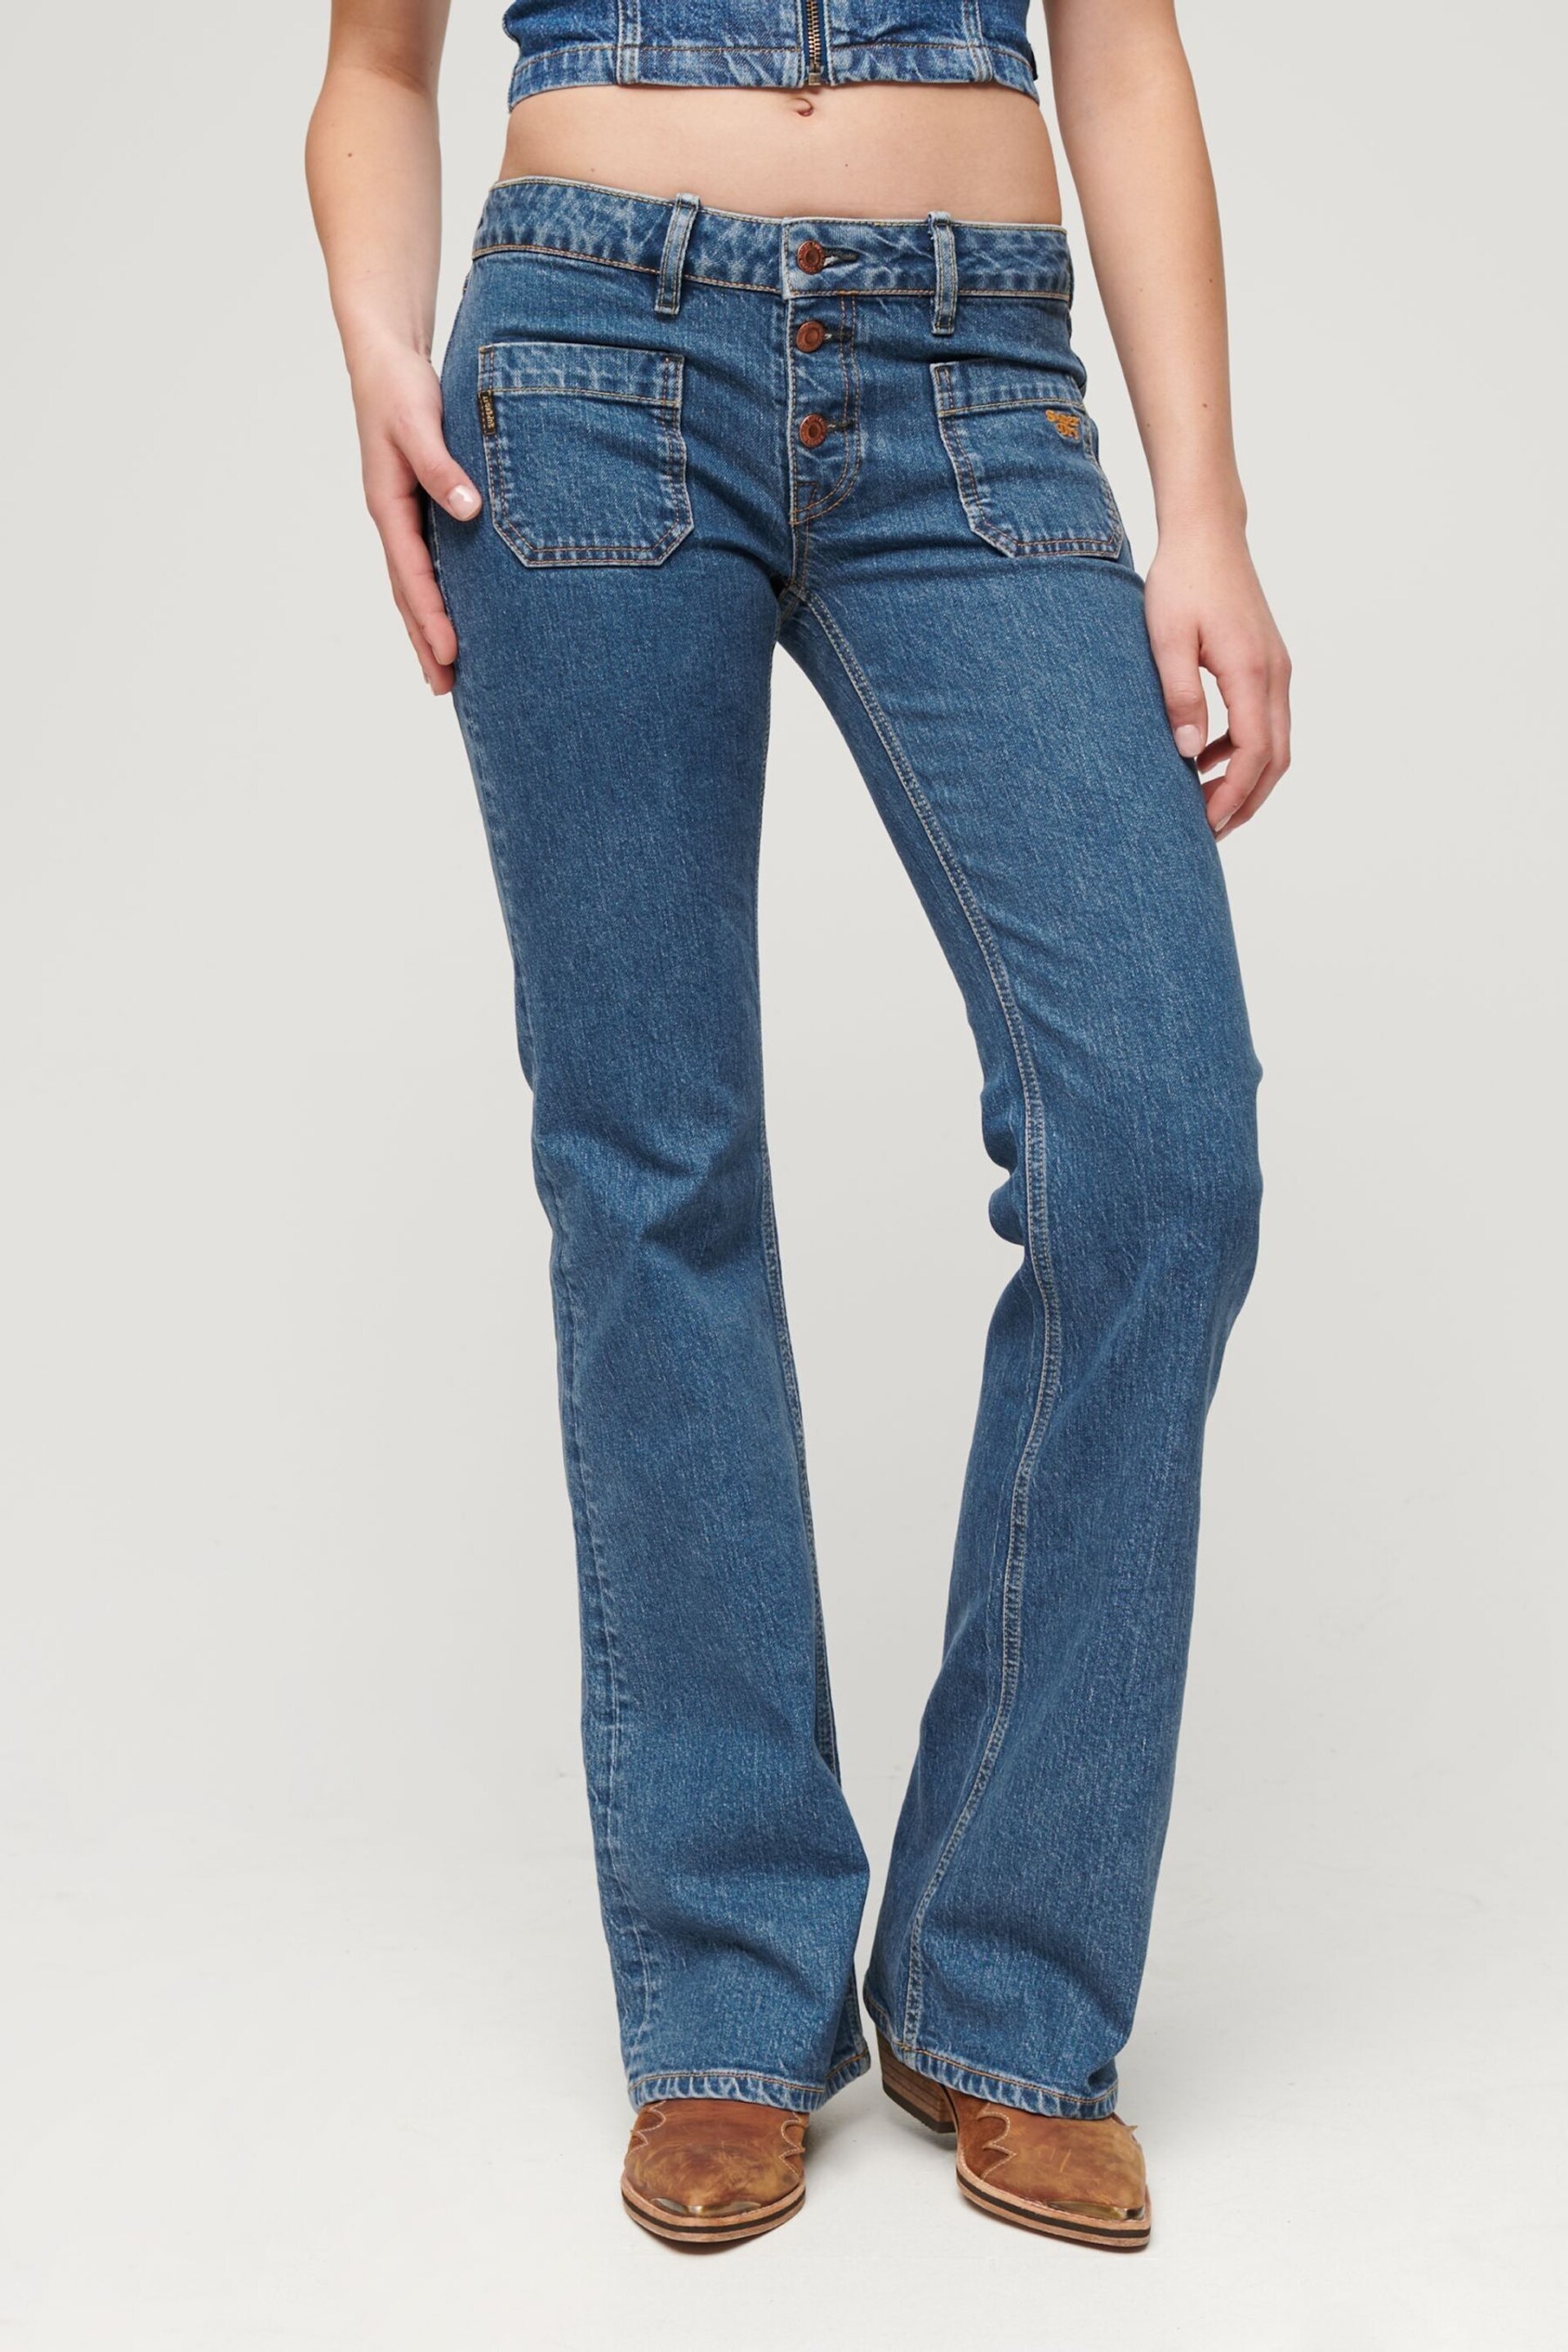 Superdry Blue Cotton Vintage Low Rise Slim Flare Jeans - Image 2 of 3